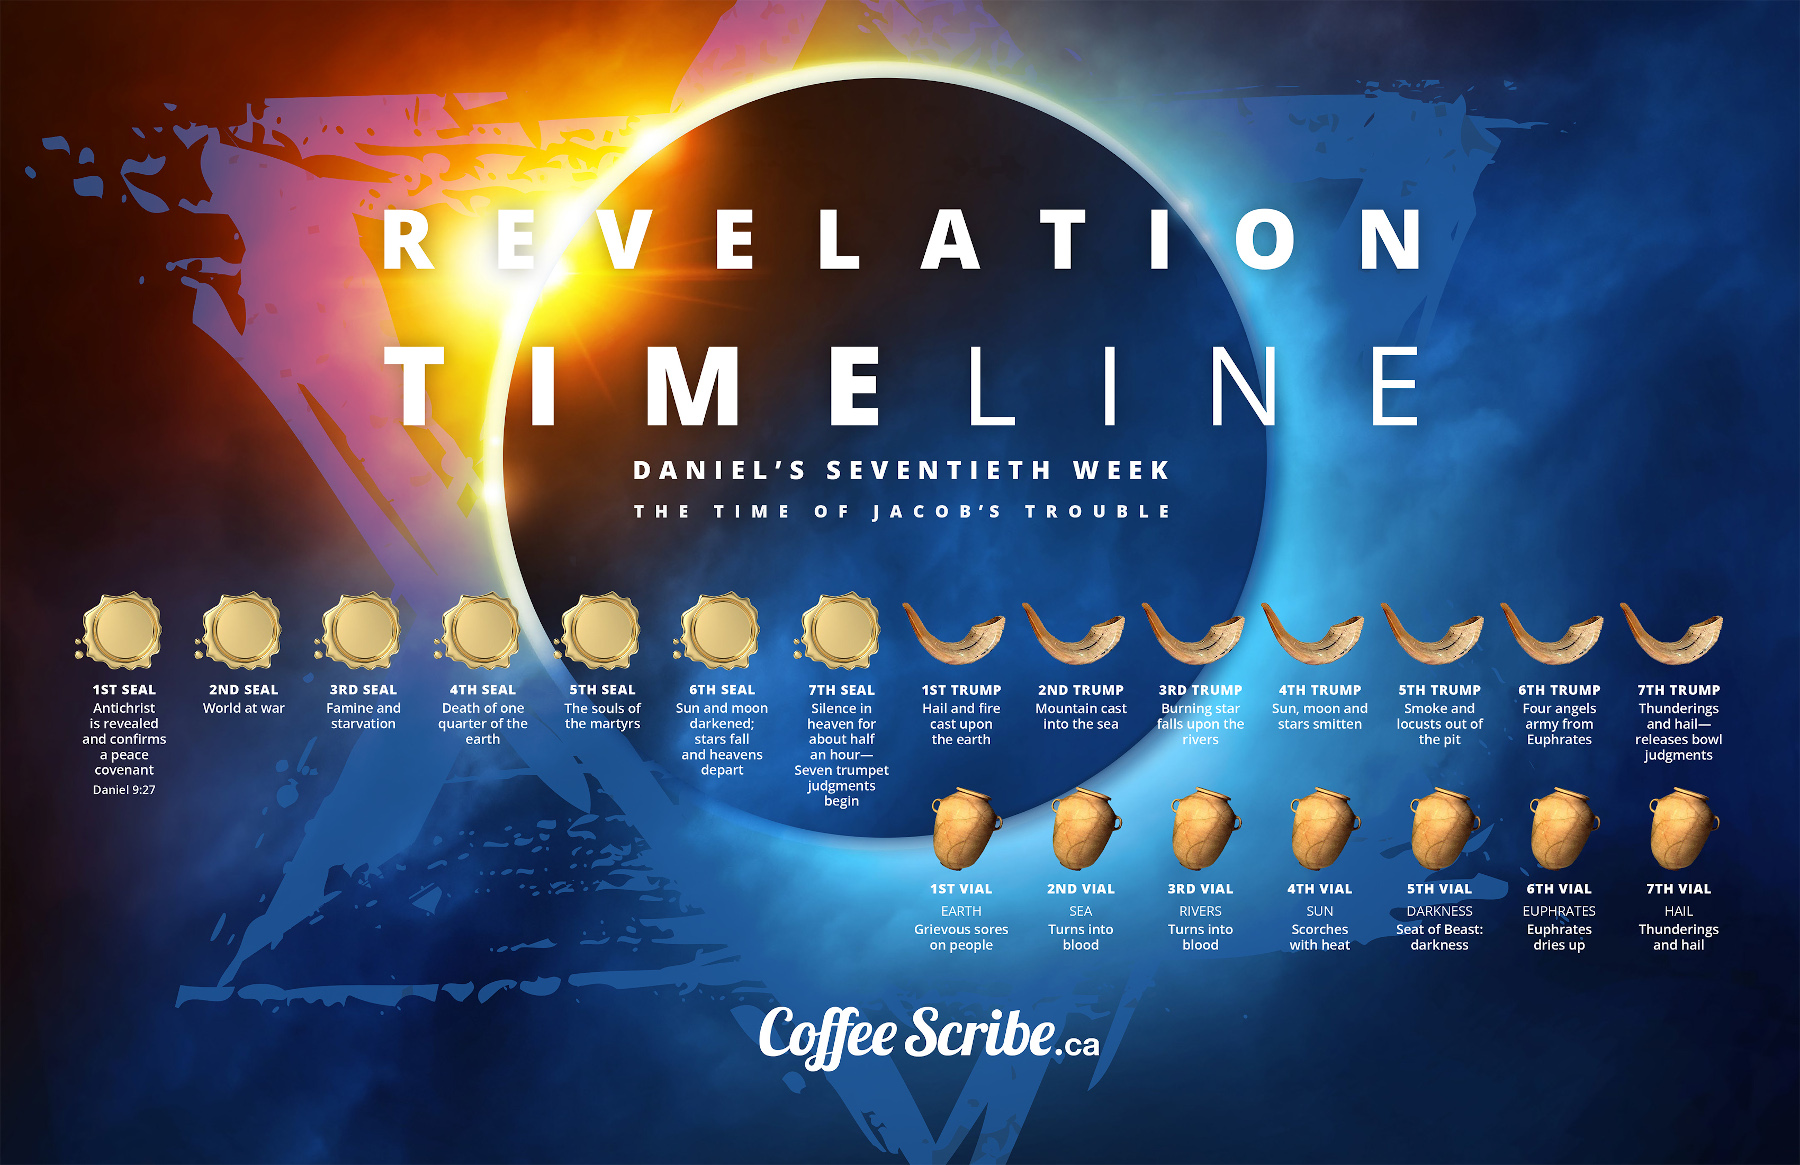 Revelation timeline